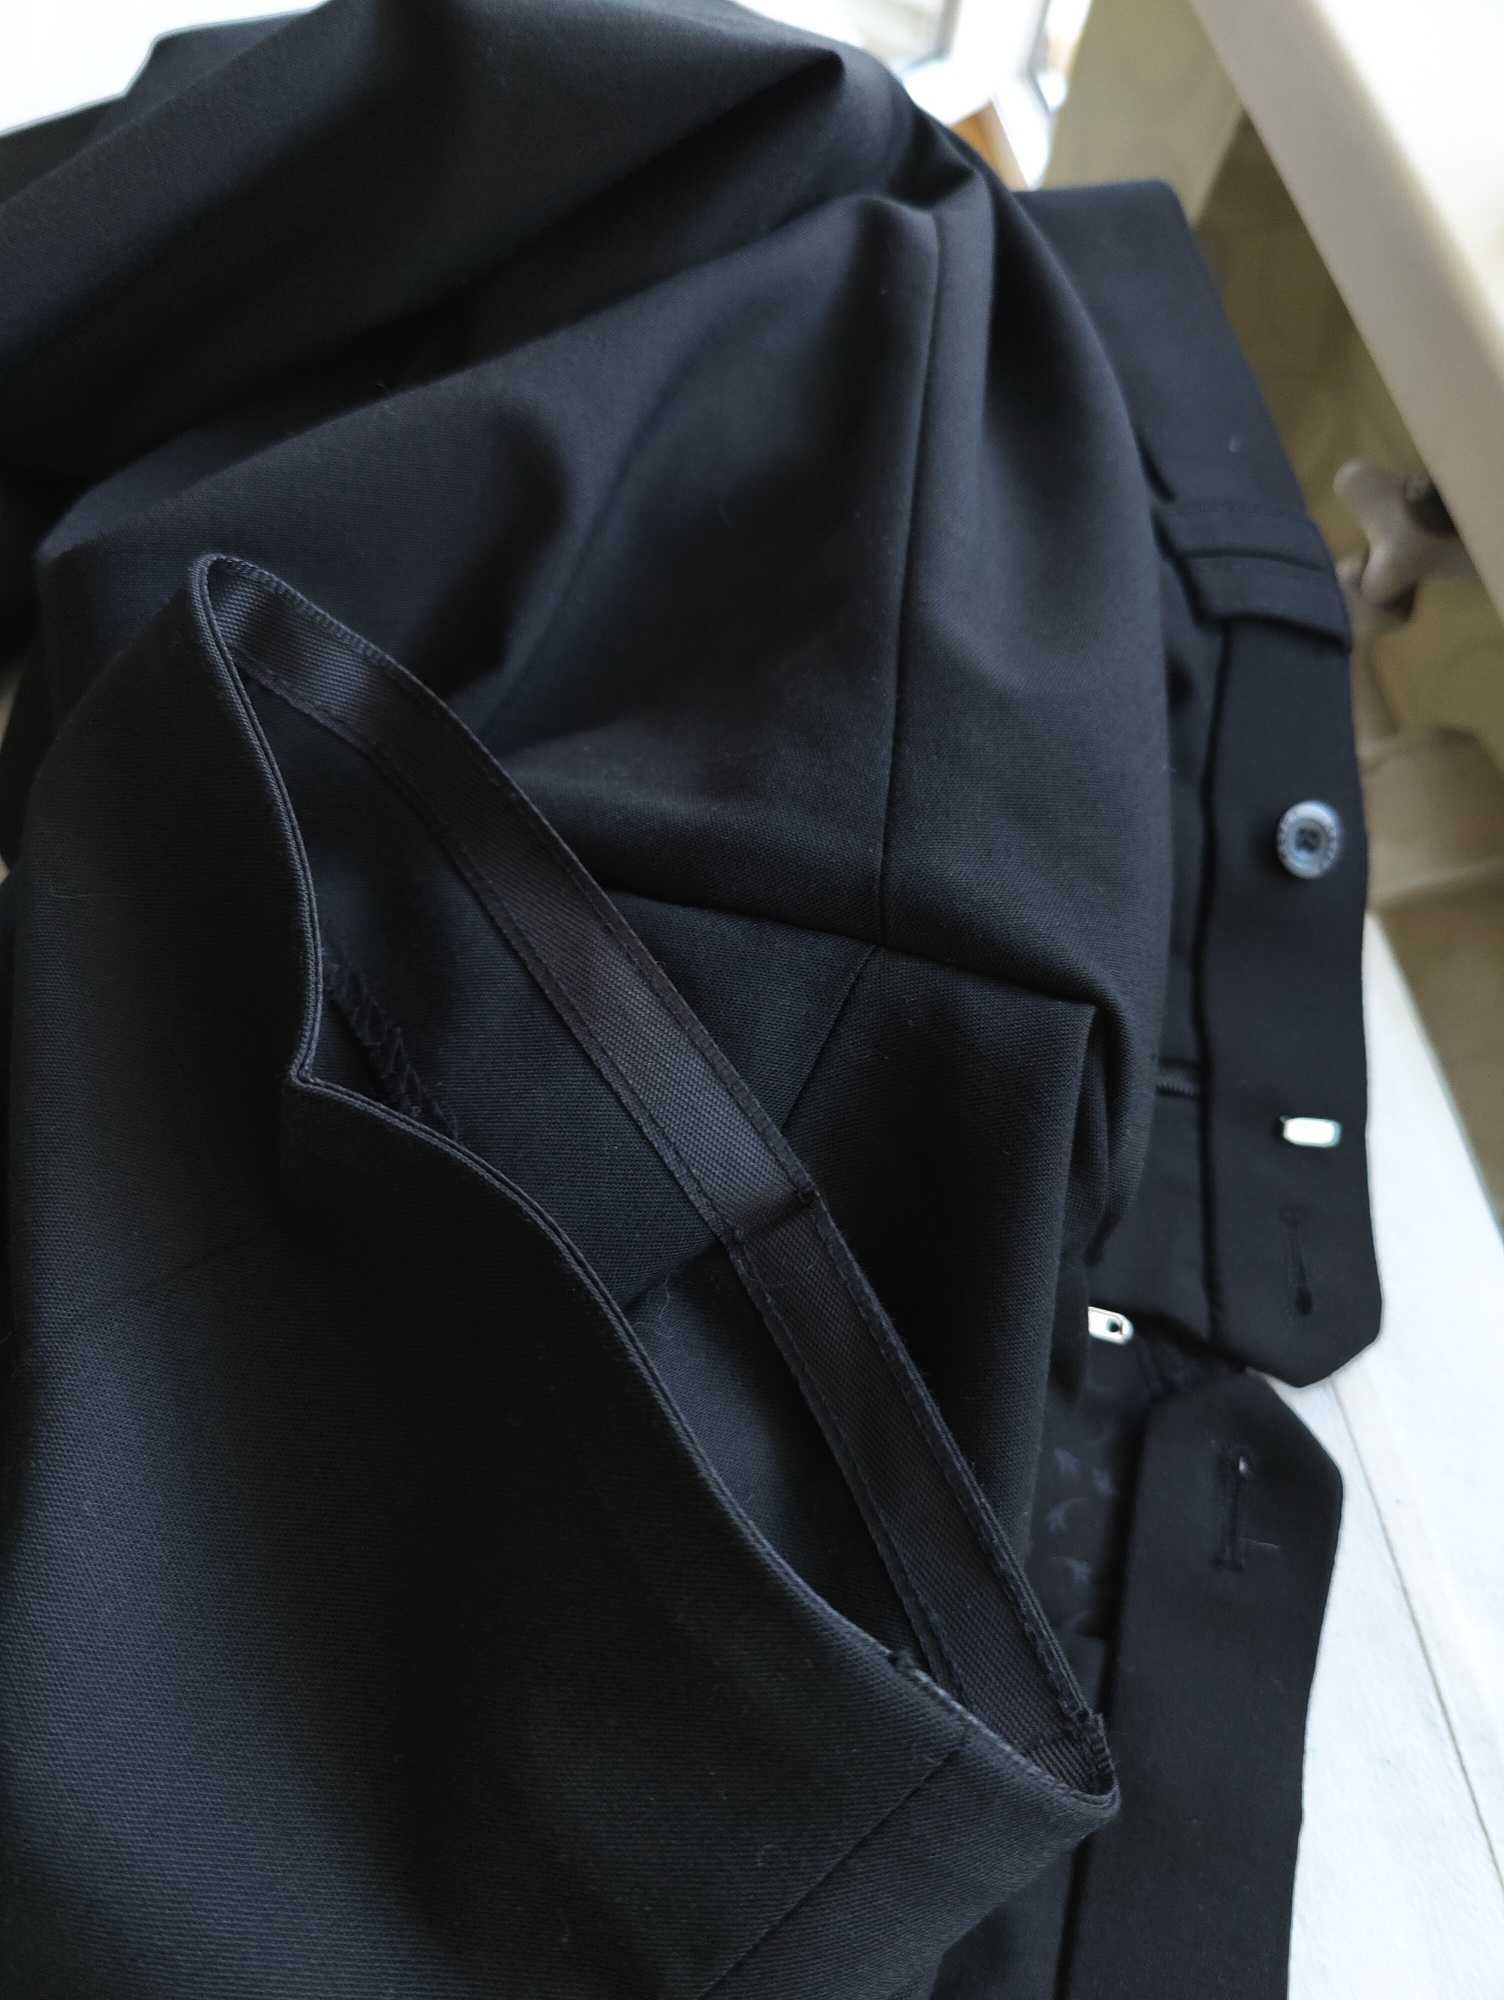 Джинсы брюки Meyer wool mix trousers Germany w38 stretch black.